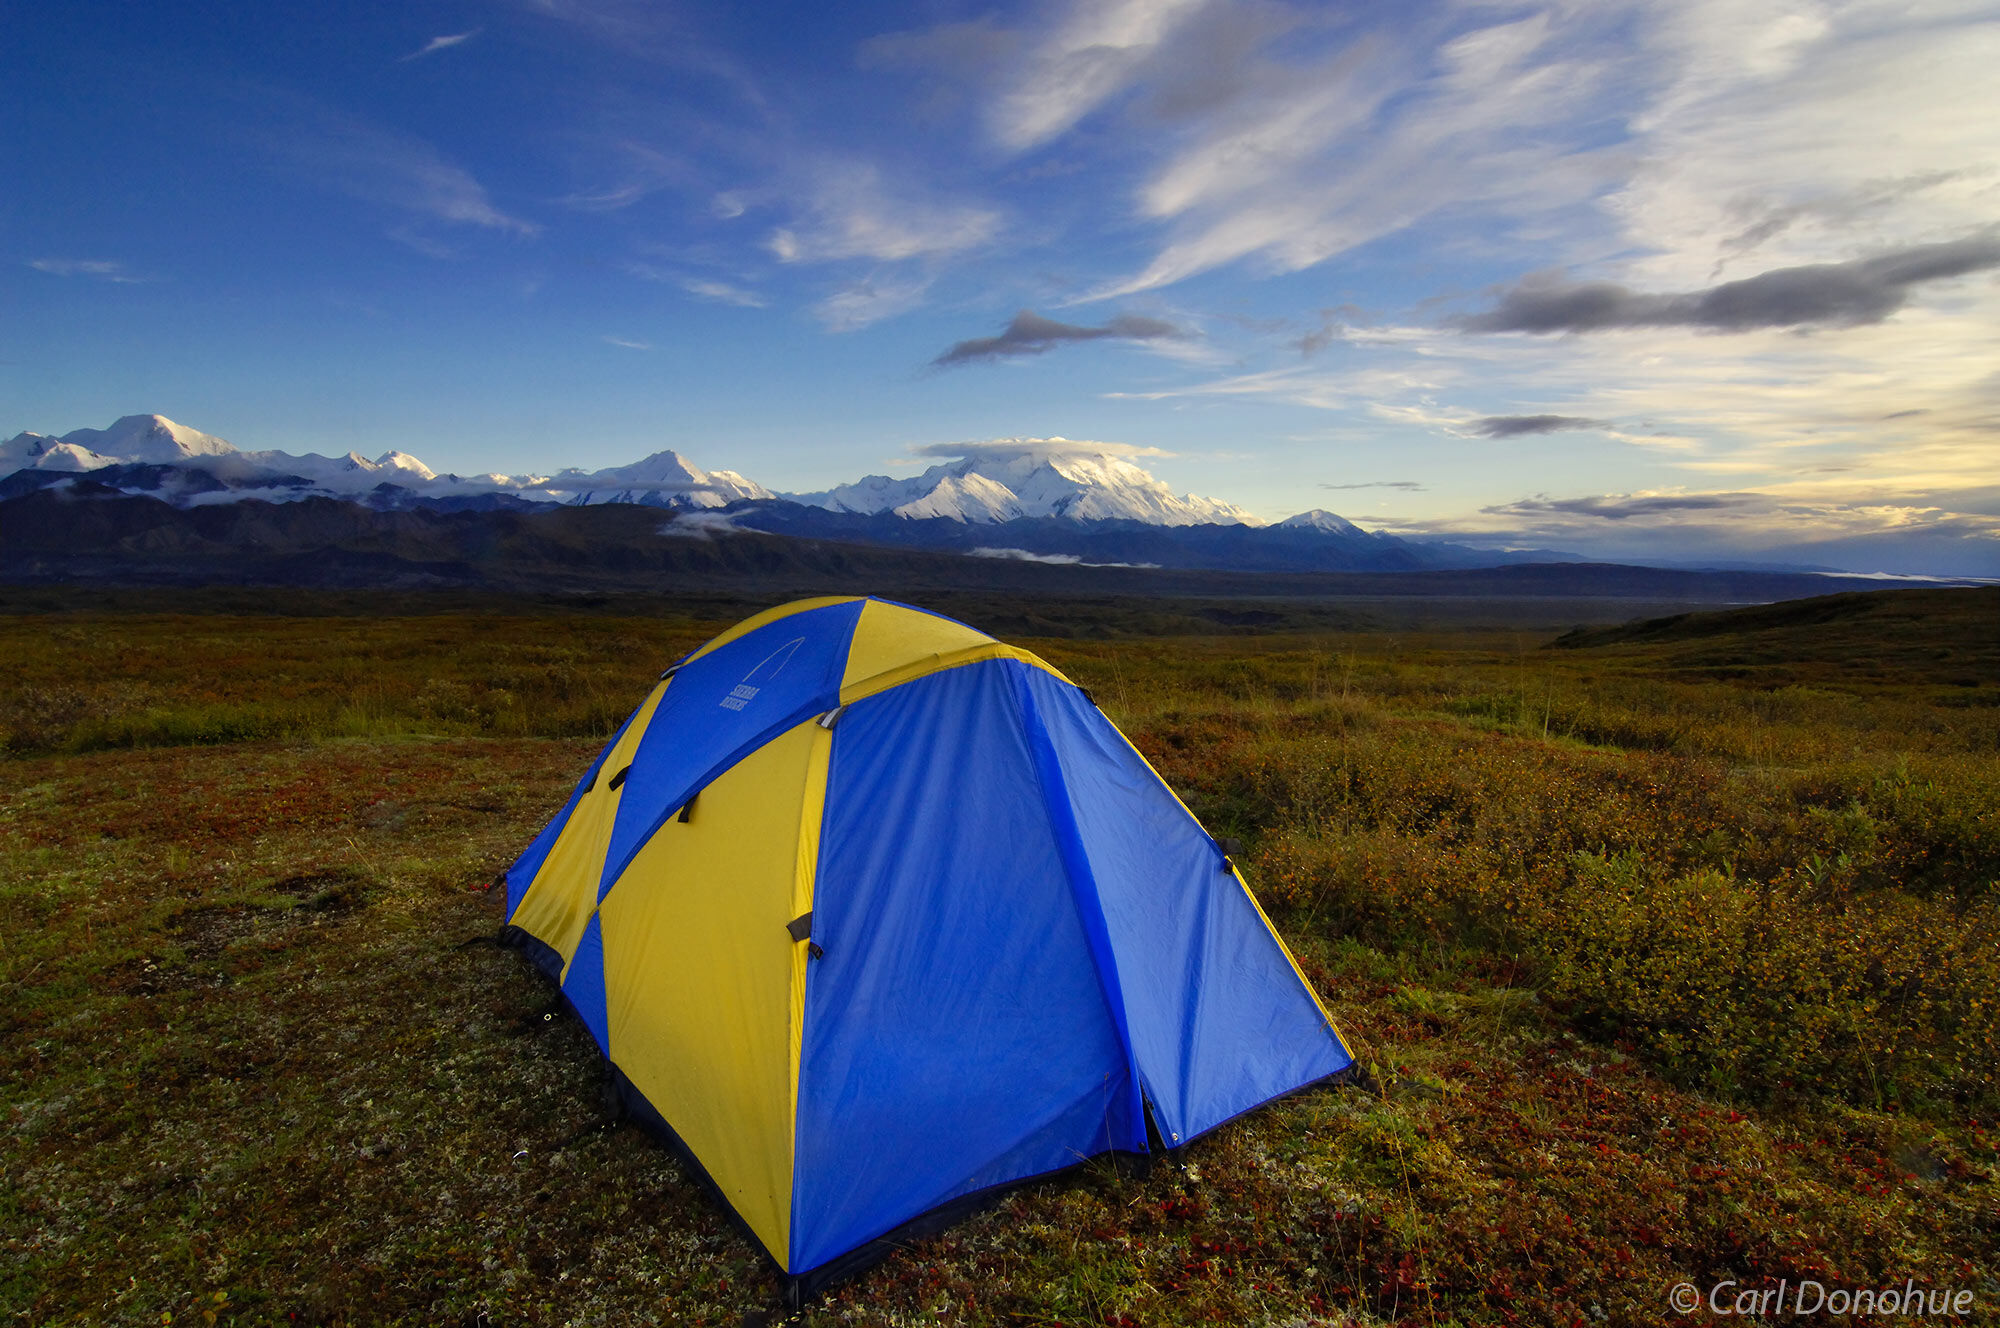 A backpacker's tentsite affords a nice view of Mt. Denali, Denali National Park, Alaska.